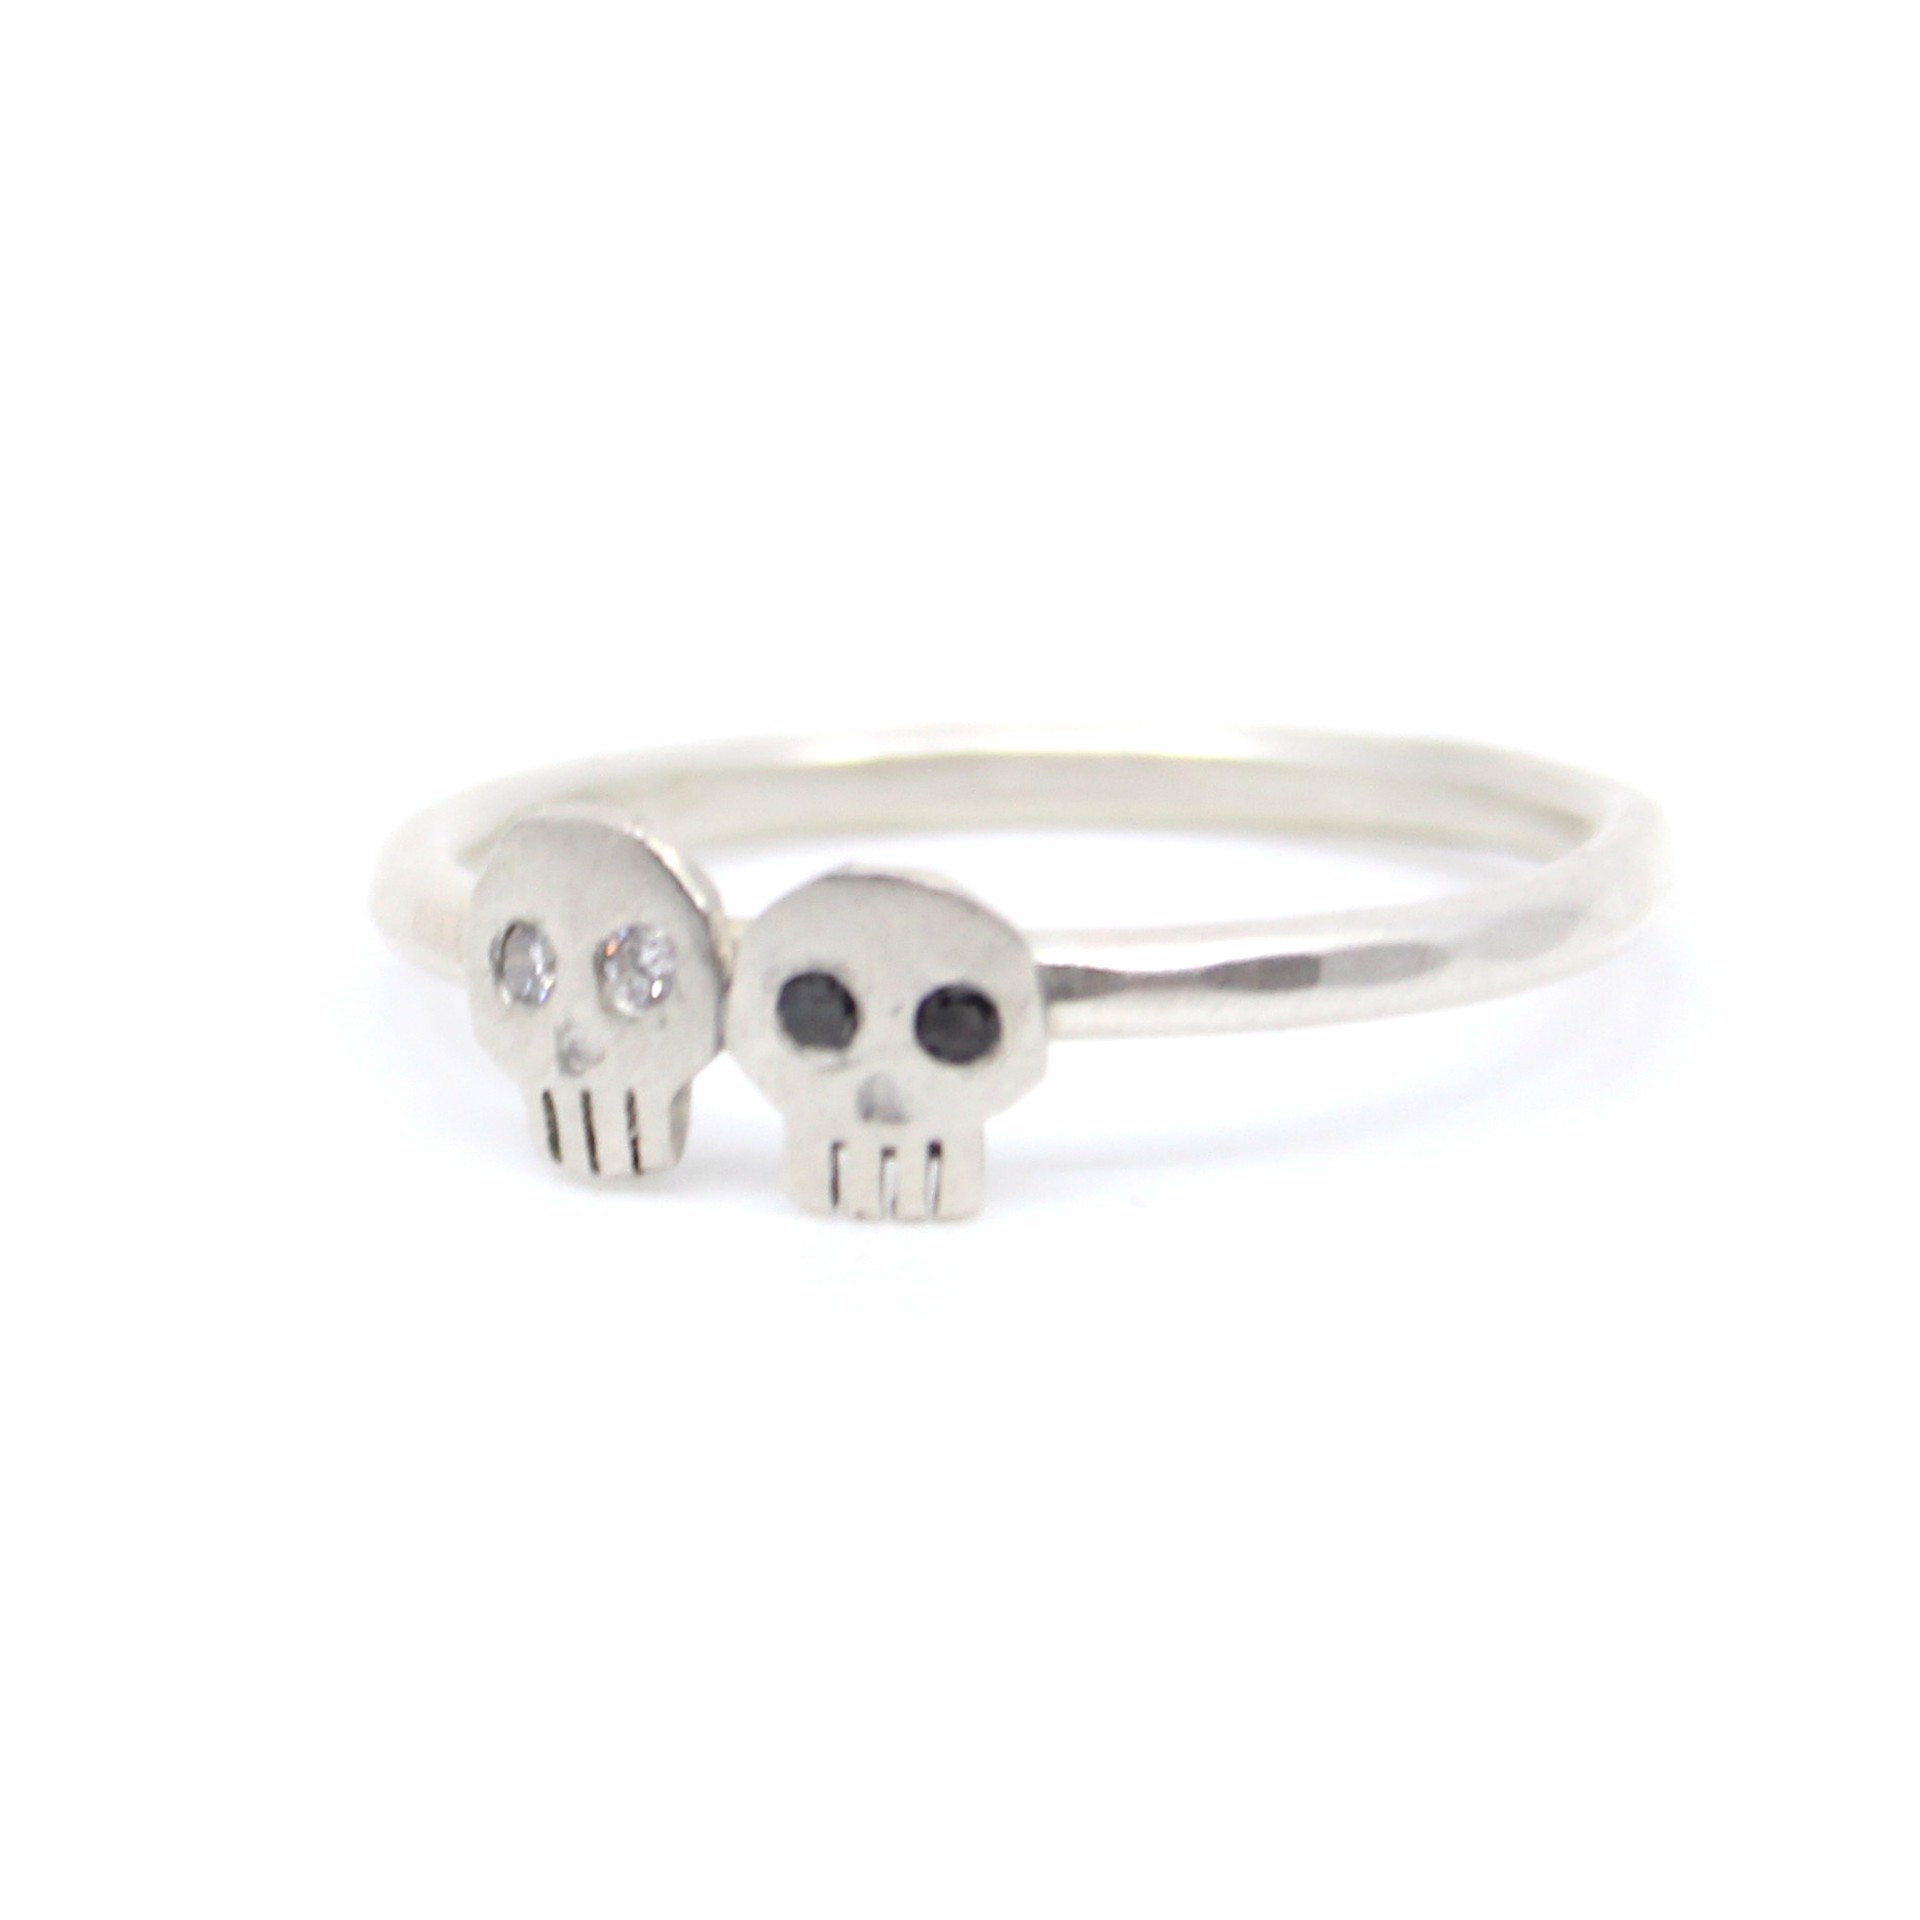 Skull Buddies Ring (Size 6.5) by Susan Elnora